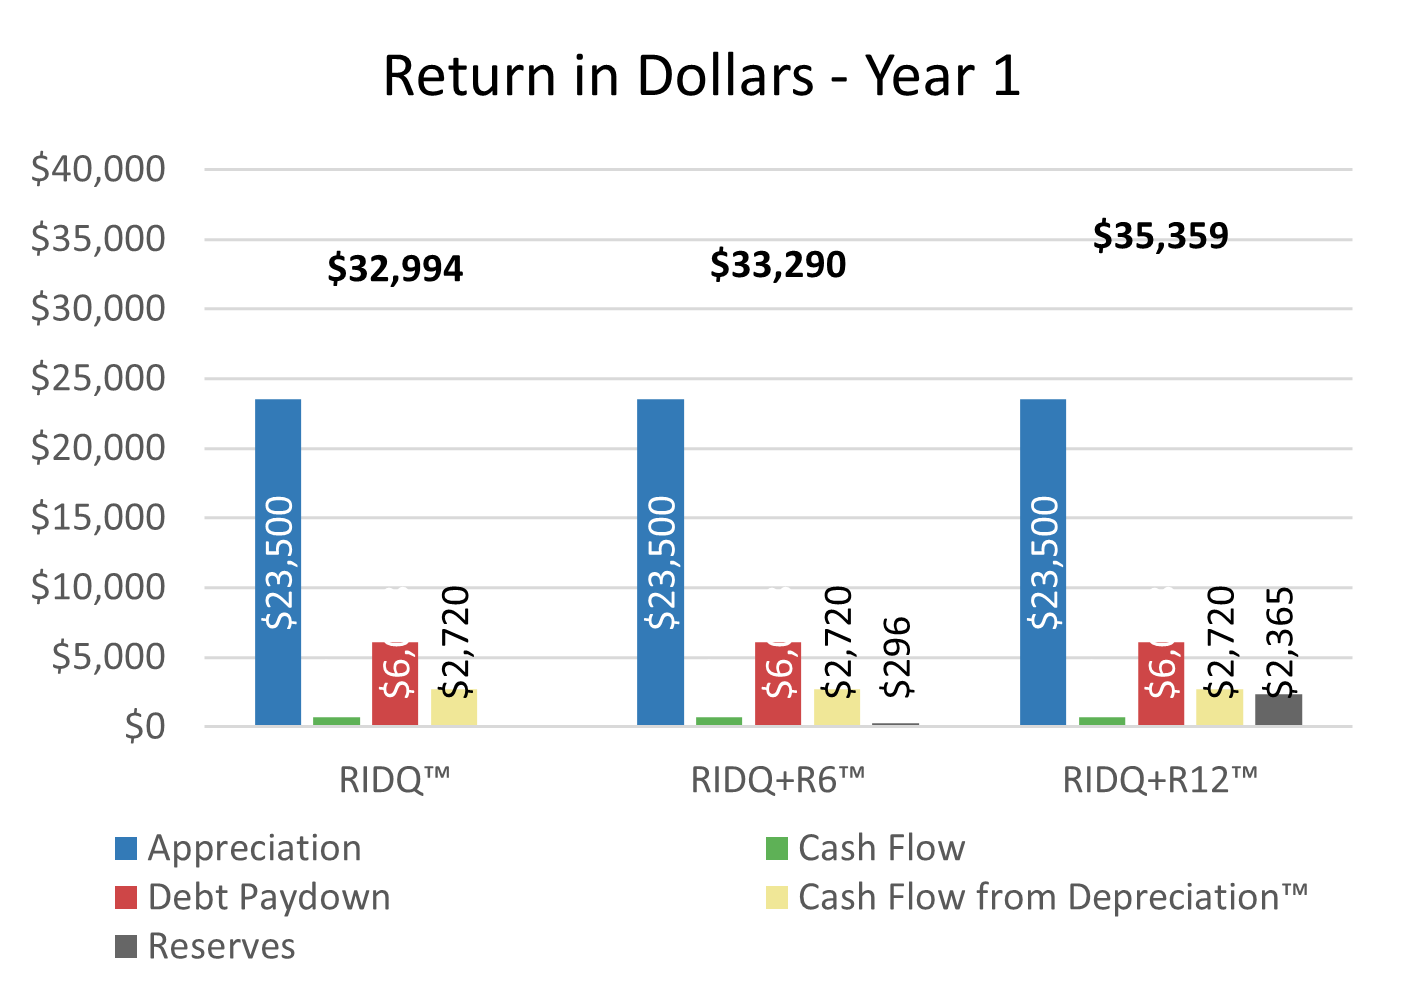 2 - Return in Dollars - Year 1